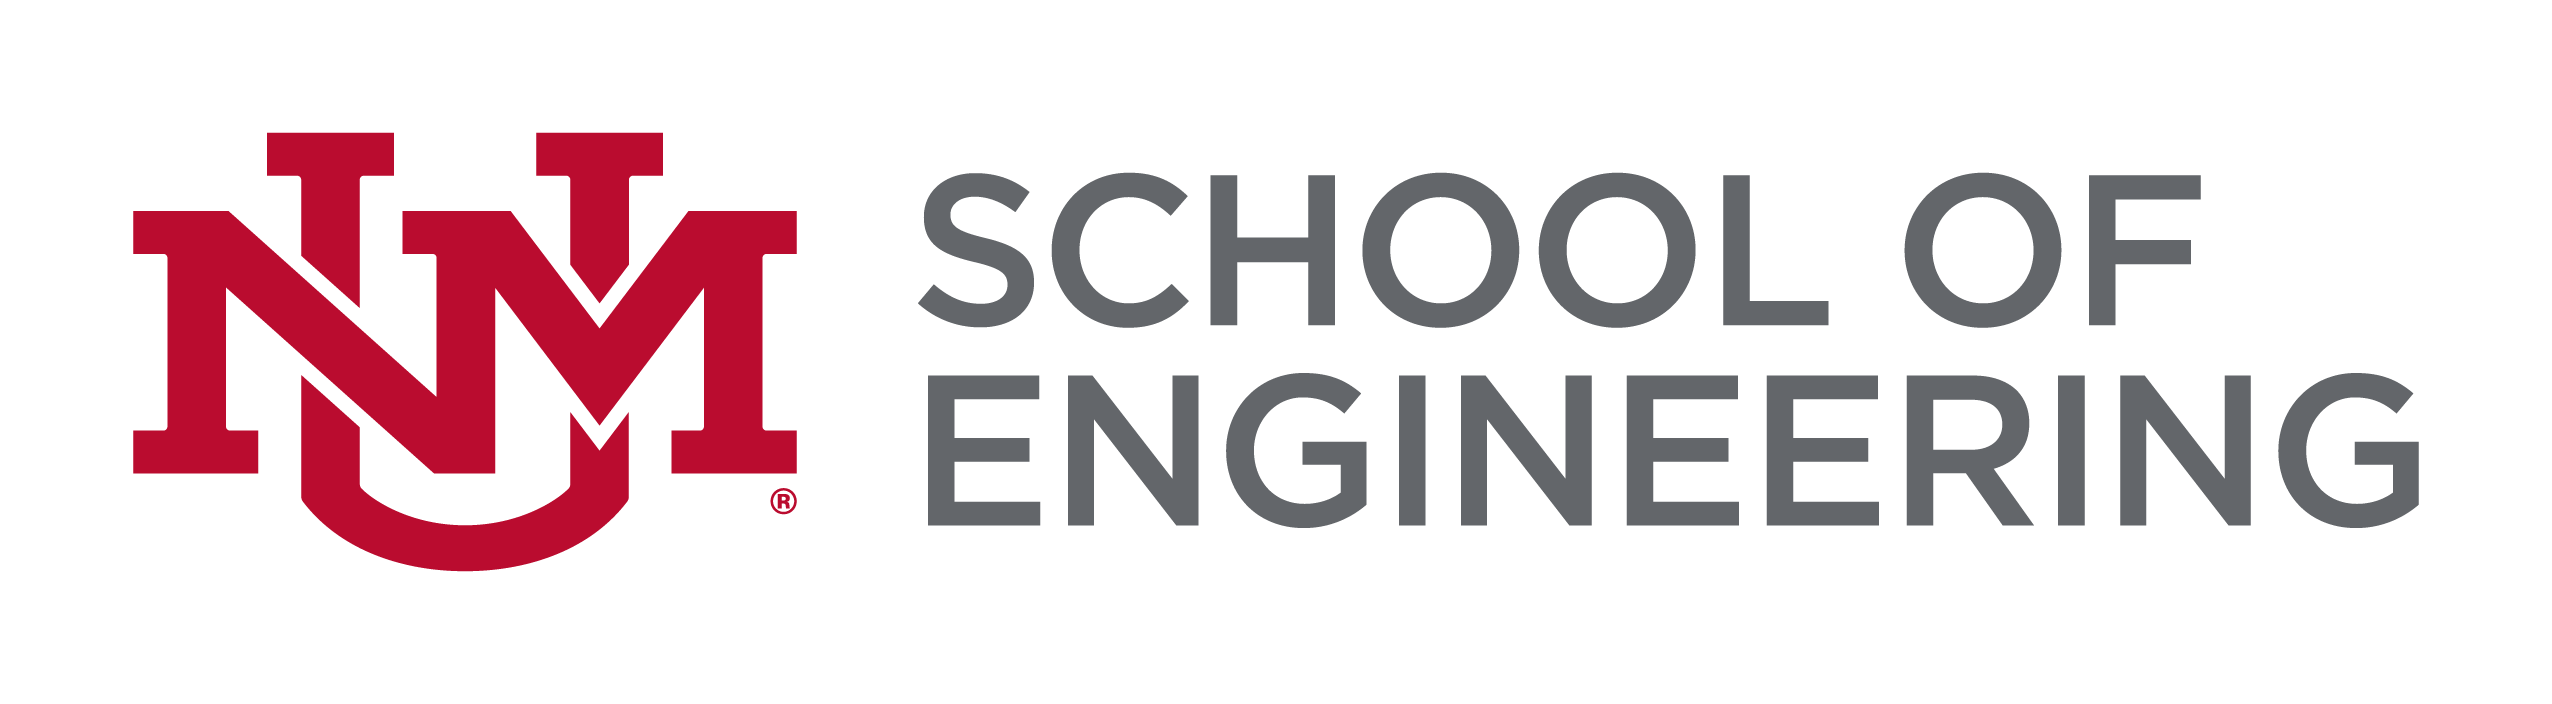 UNM Logo - School of Engineering. The University of New Mexico